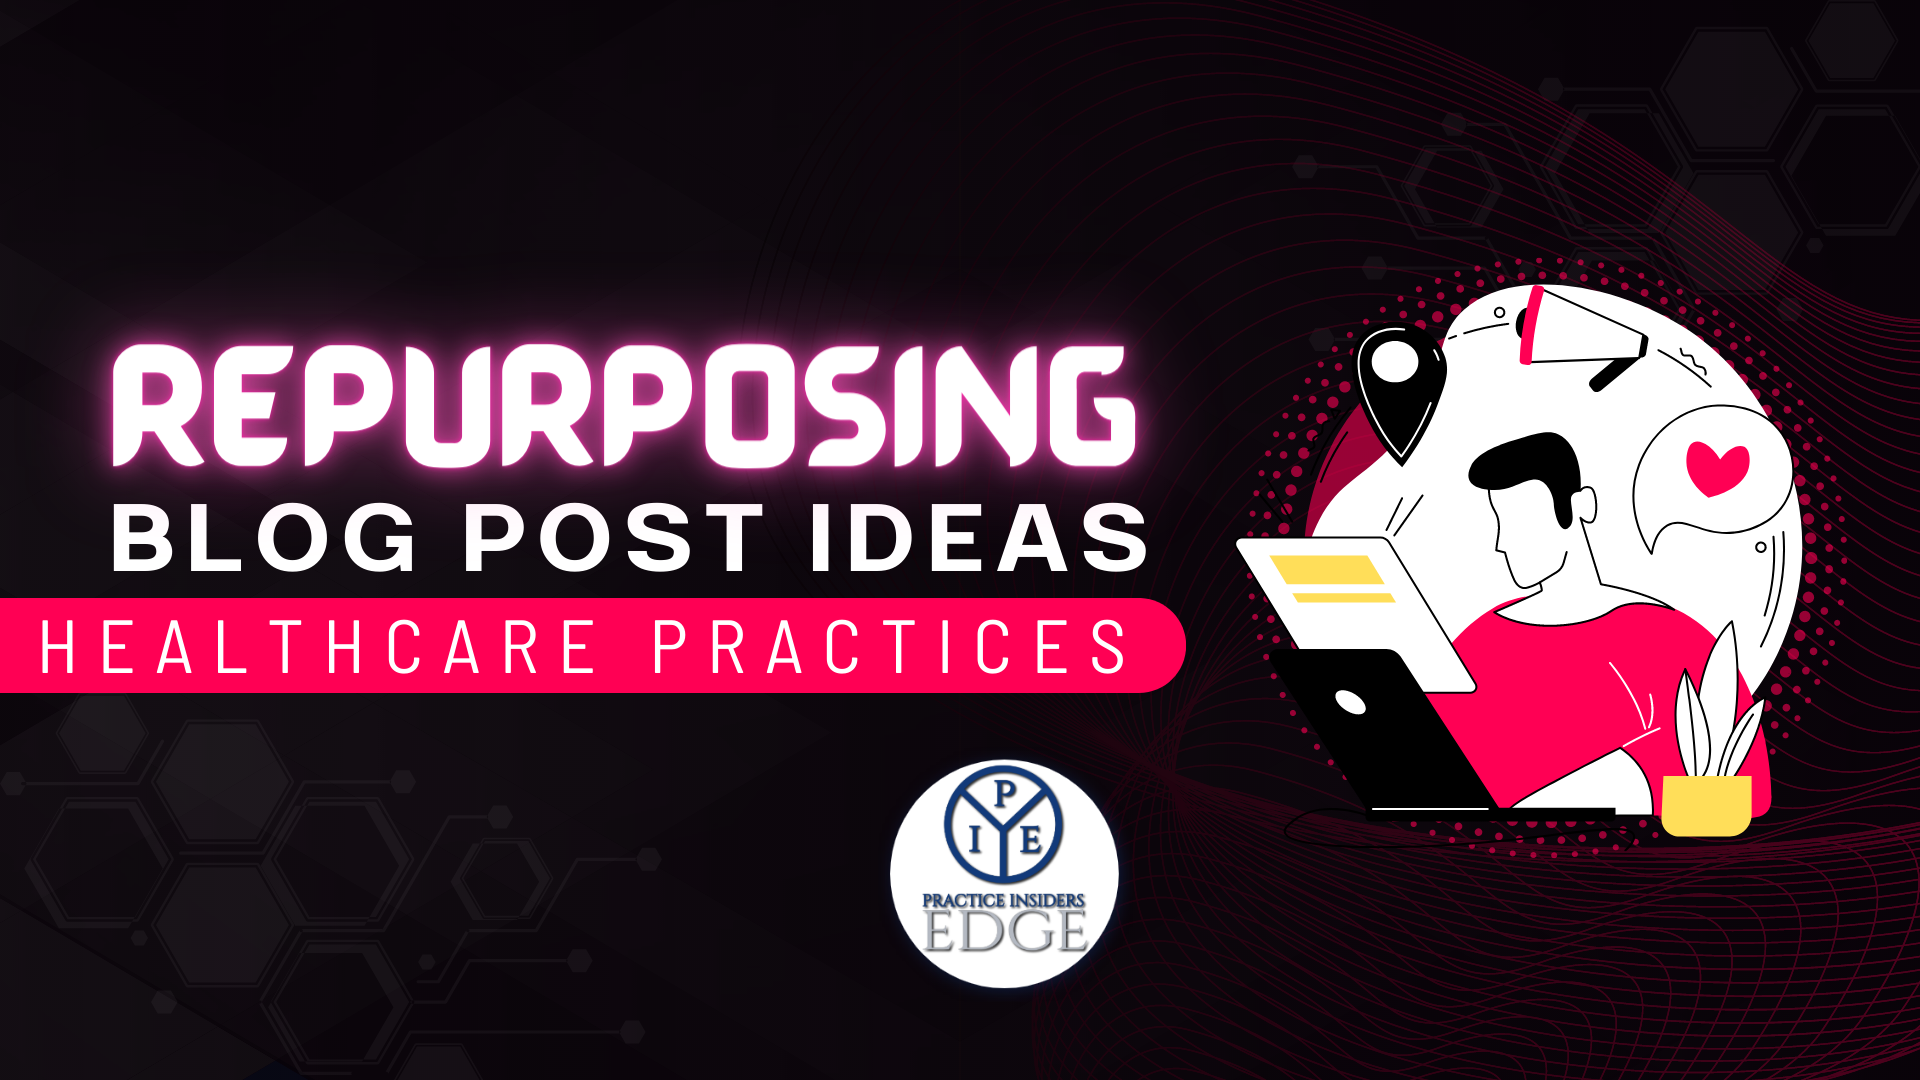 Repurposing Blog Post Ideas for Healthcare Practices